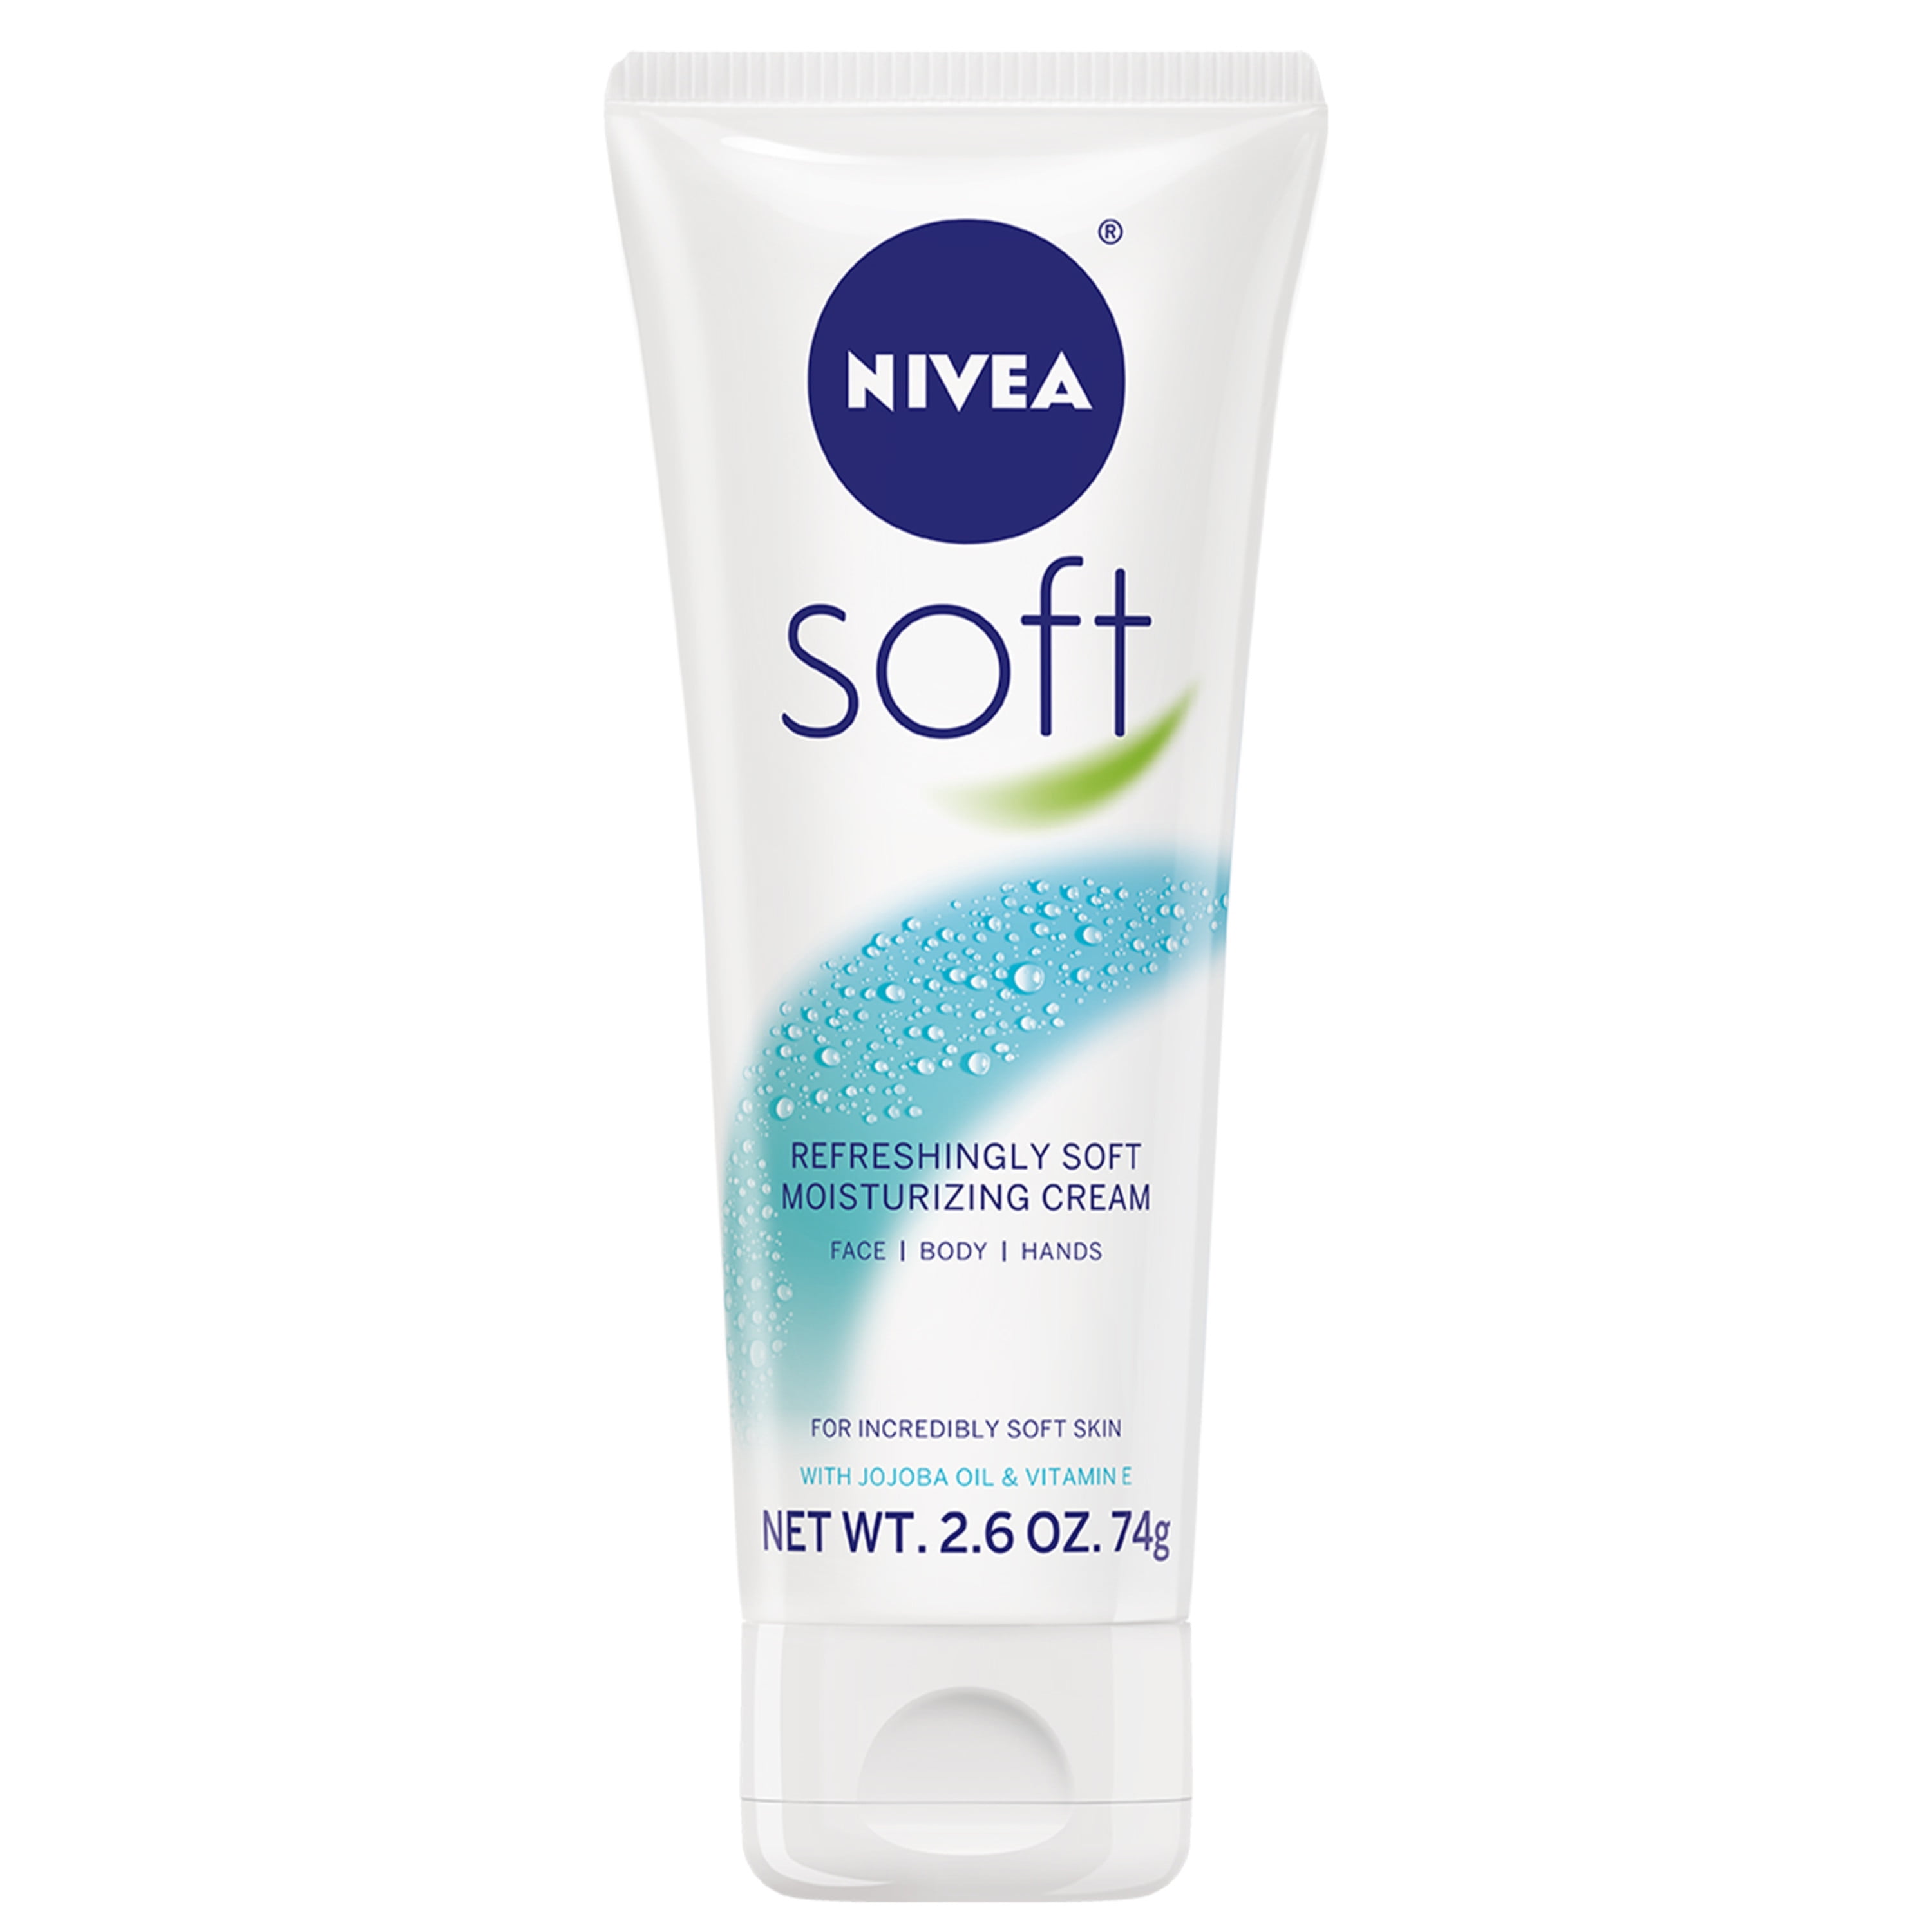 NIVEA Soft Cream, Refreshingly Soft Moisturizing Cream, Body Cream, Face and Hand Cream, 2.6 Tube - Walmart.com